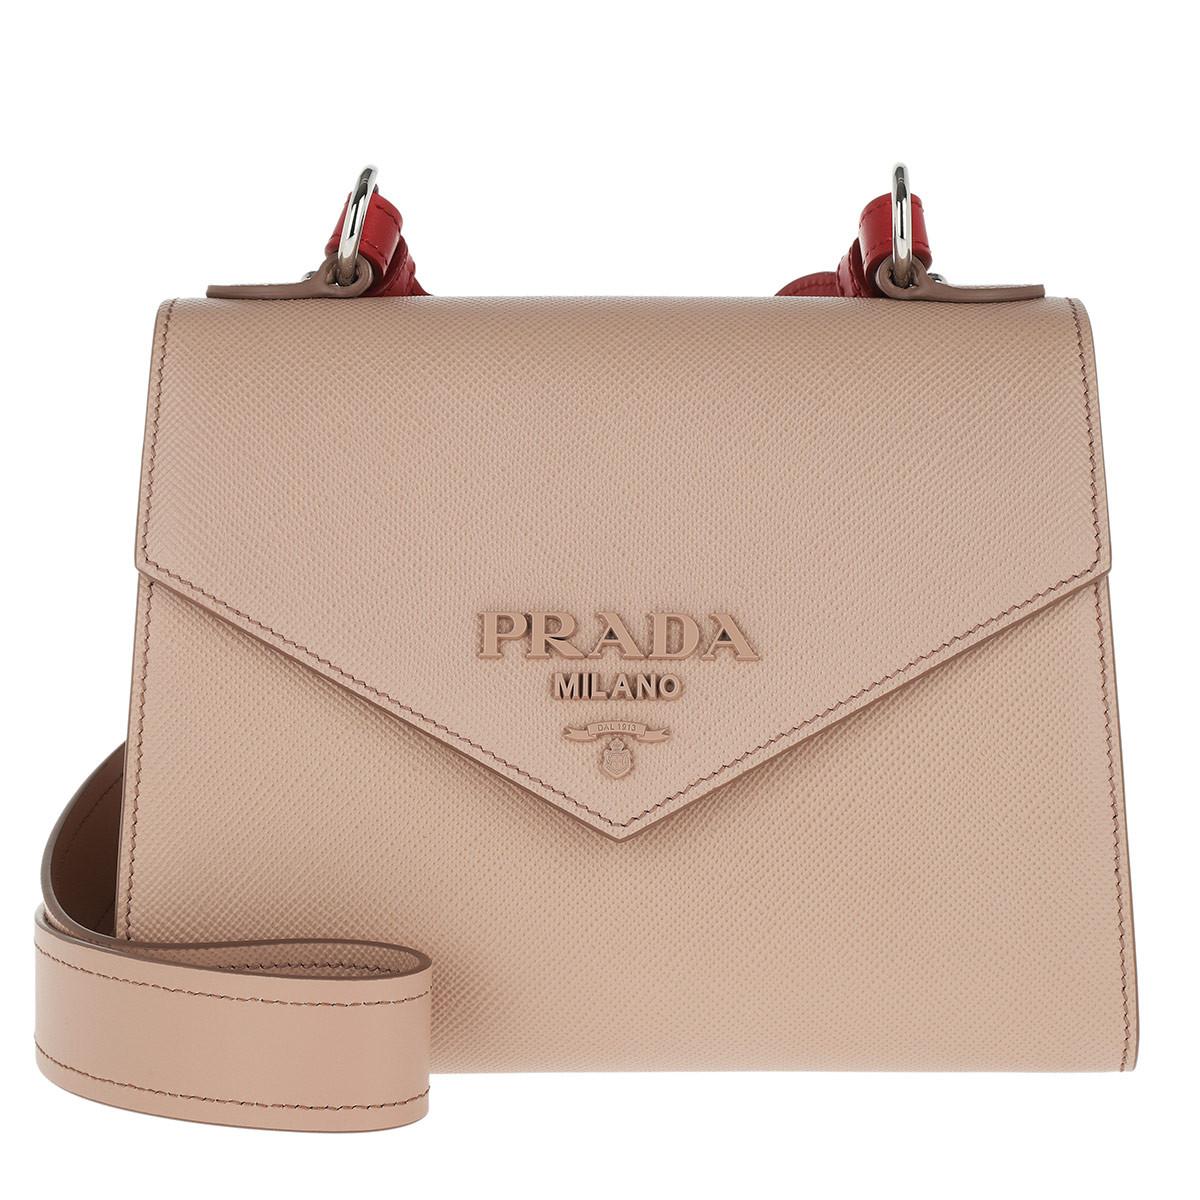 prada monochrome saffiano leather bag price